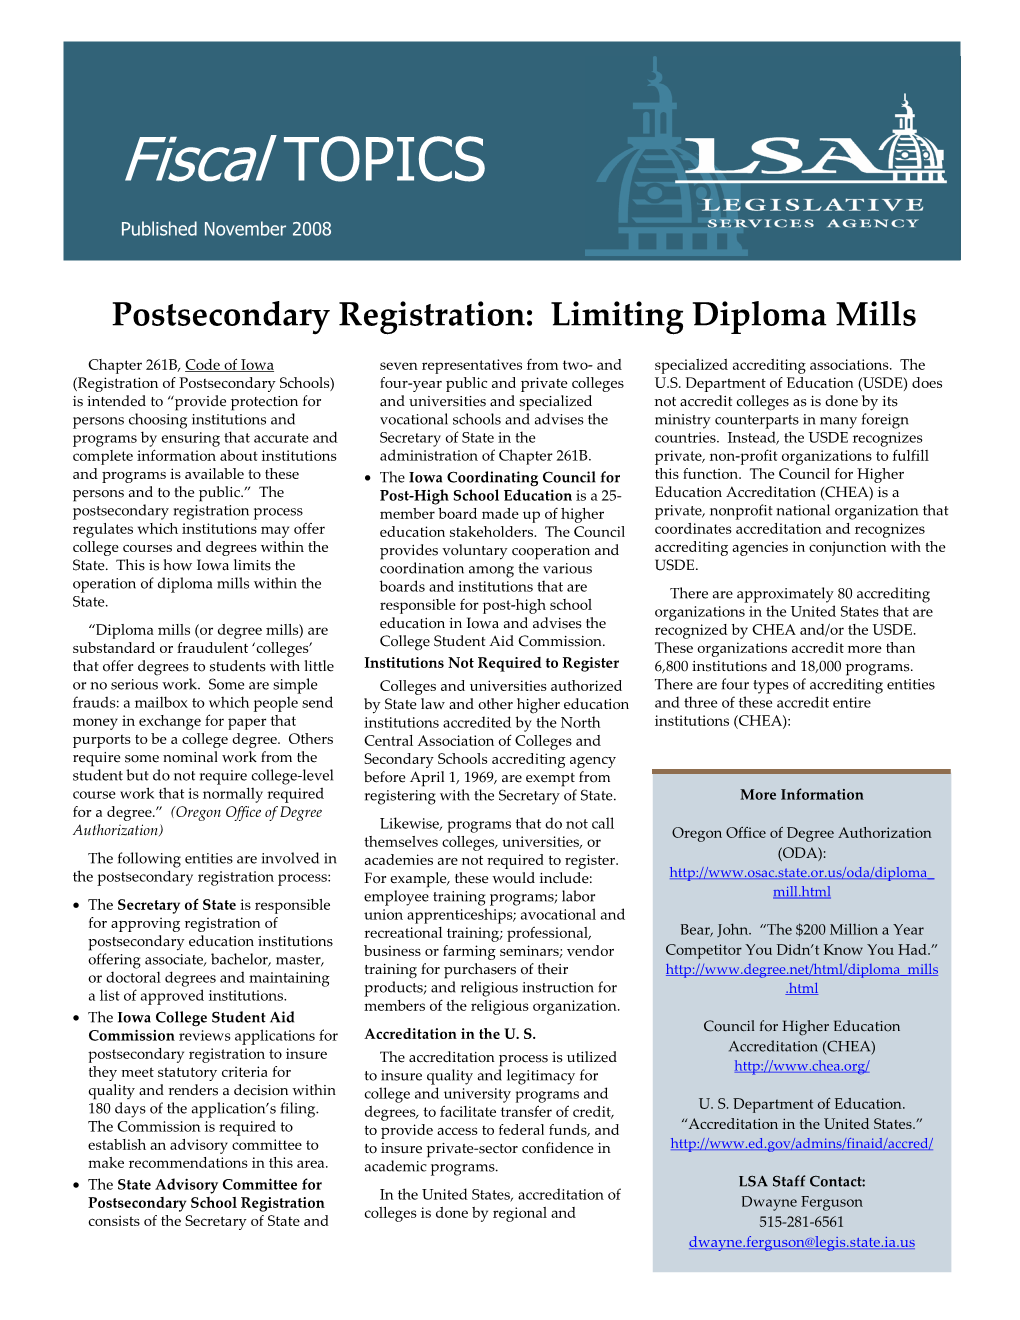 Postsecondary Registration: Limiting Diploma Mills Fiscal TOPICS